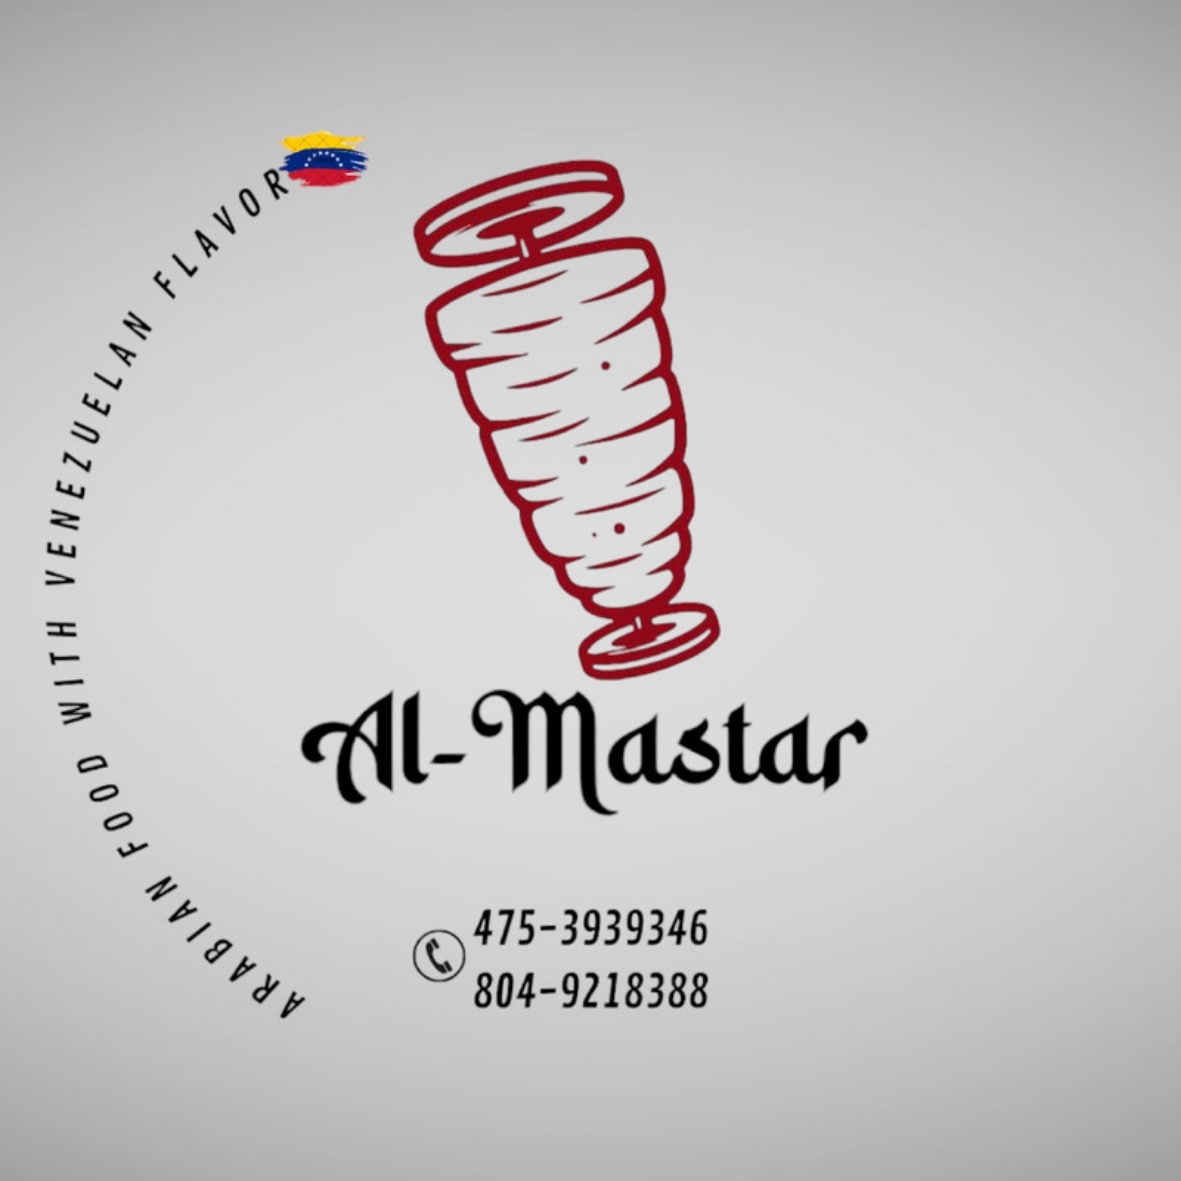 Al- Mastar Arabian Food